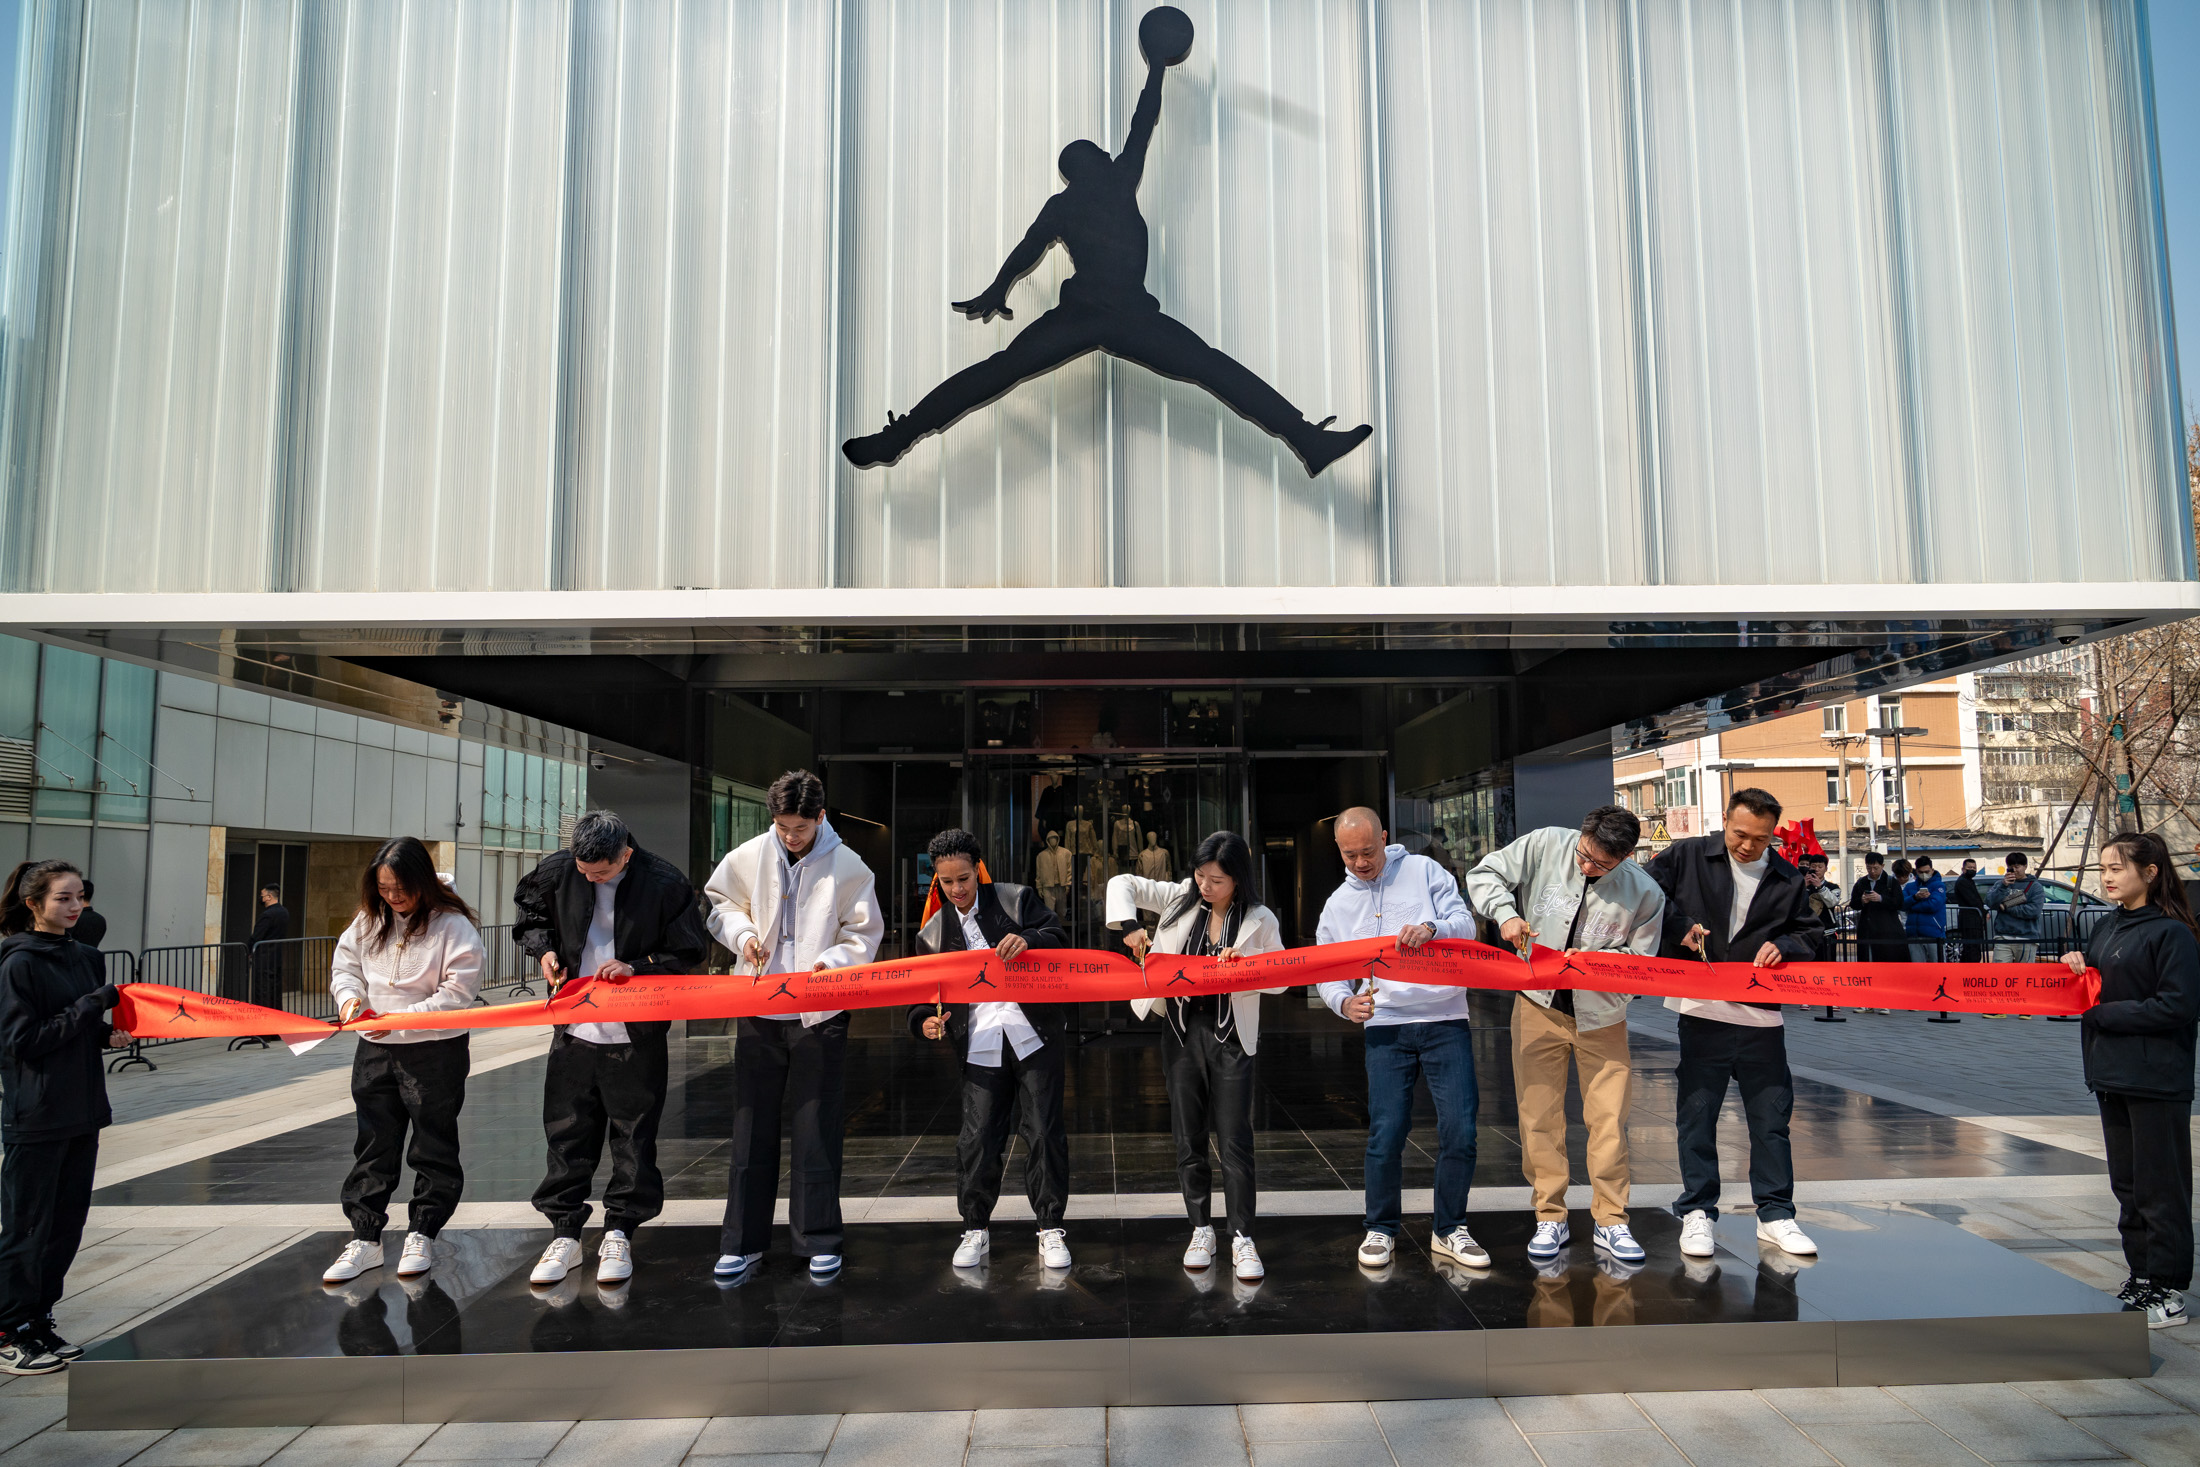 The Opening of the Jordan World of Flight Store in Beijing